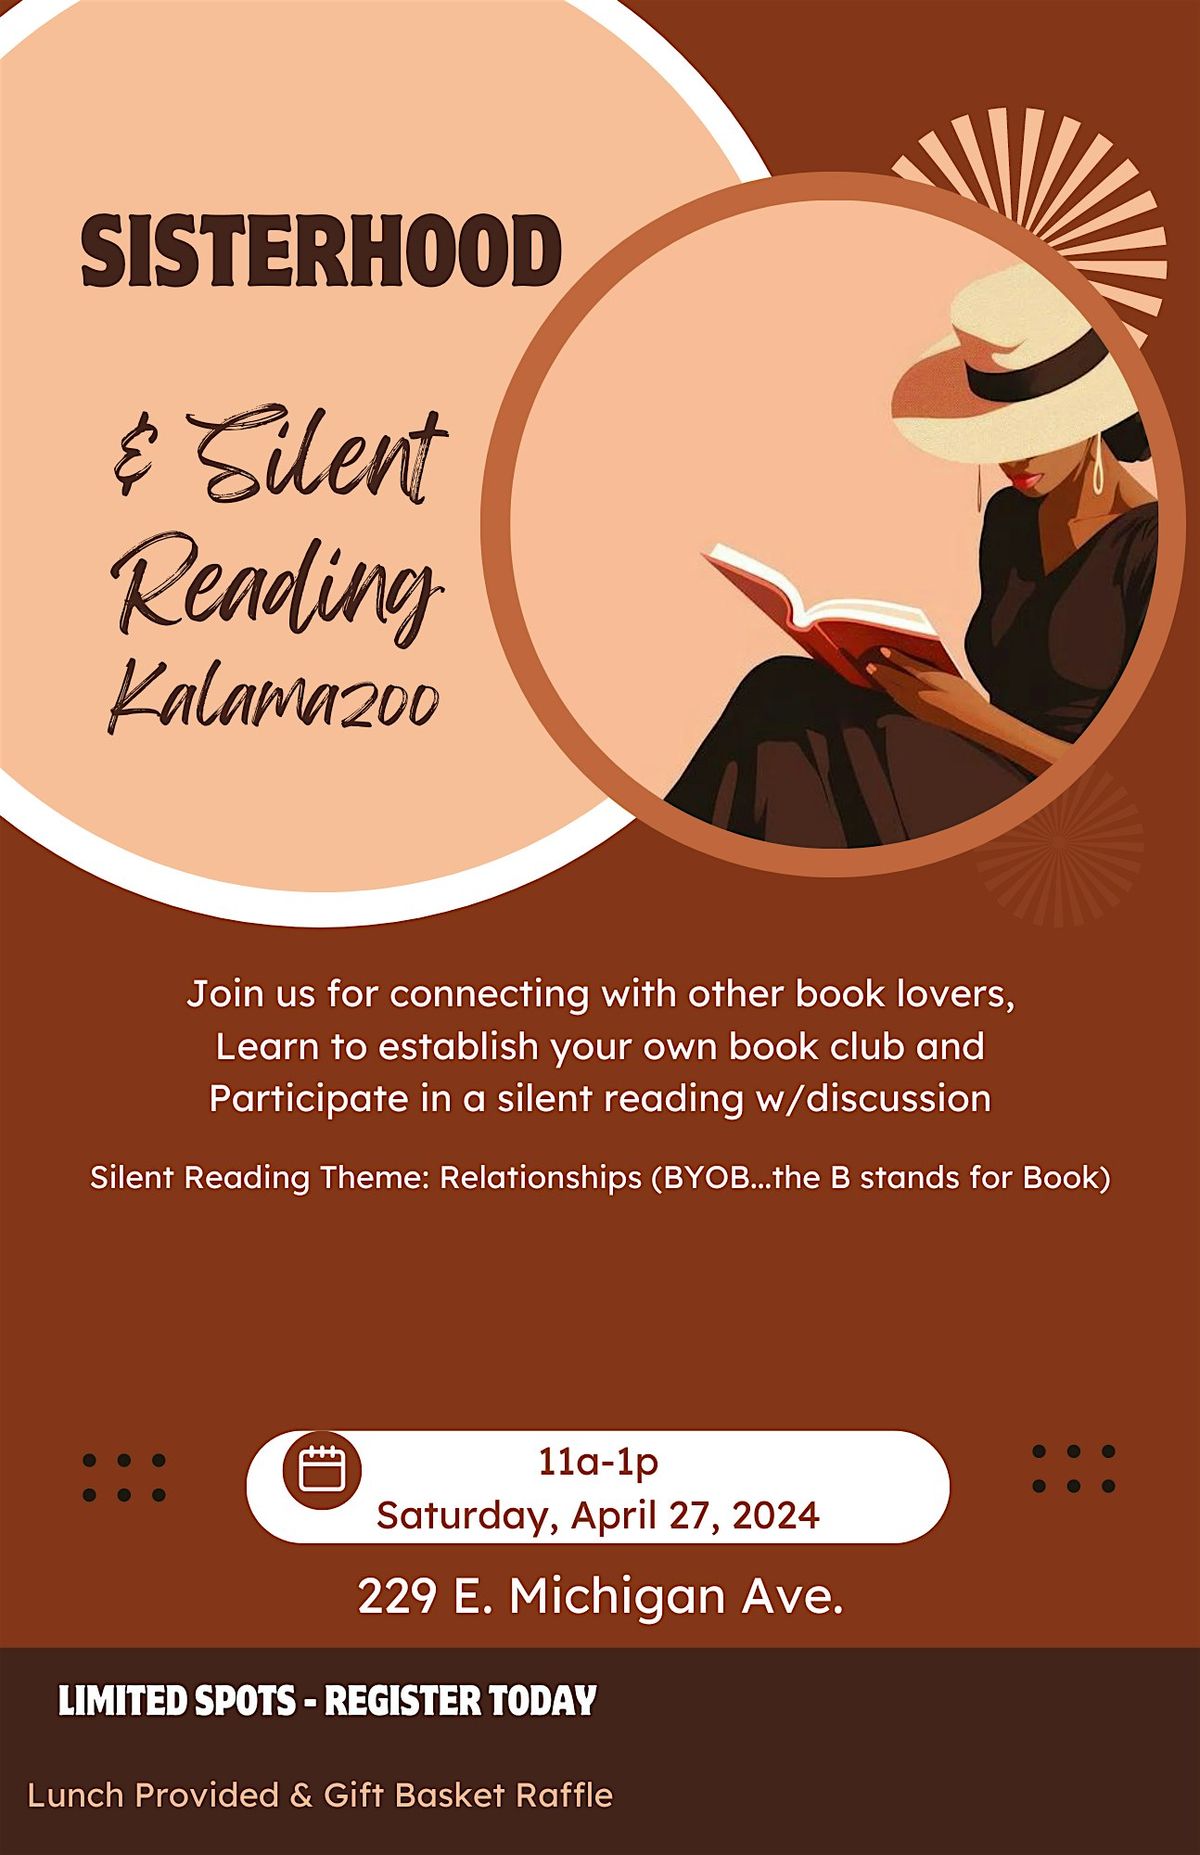 Sisterhood & Silent Reading Kalamazoo